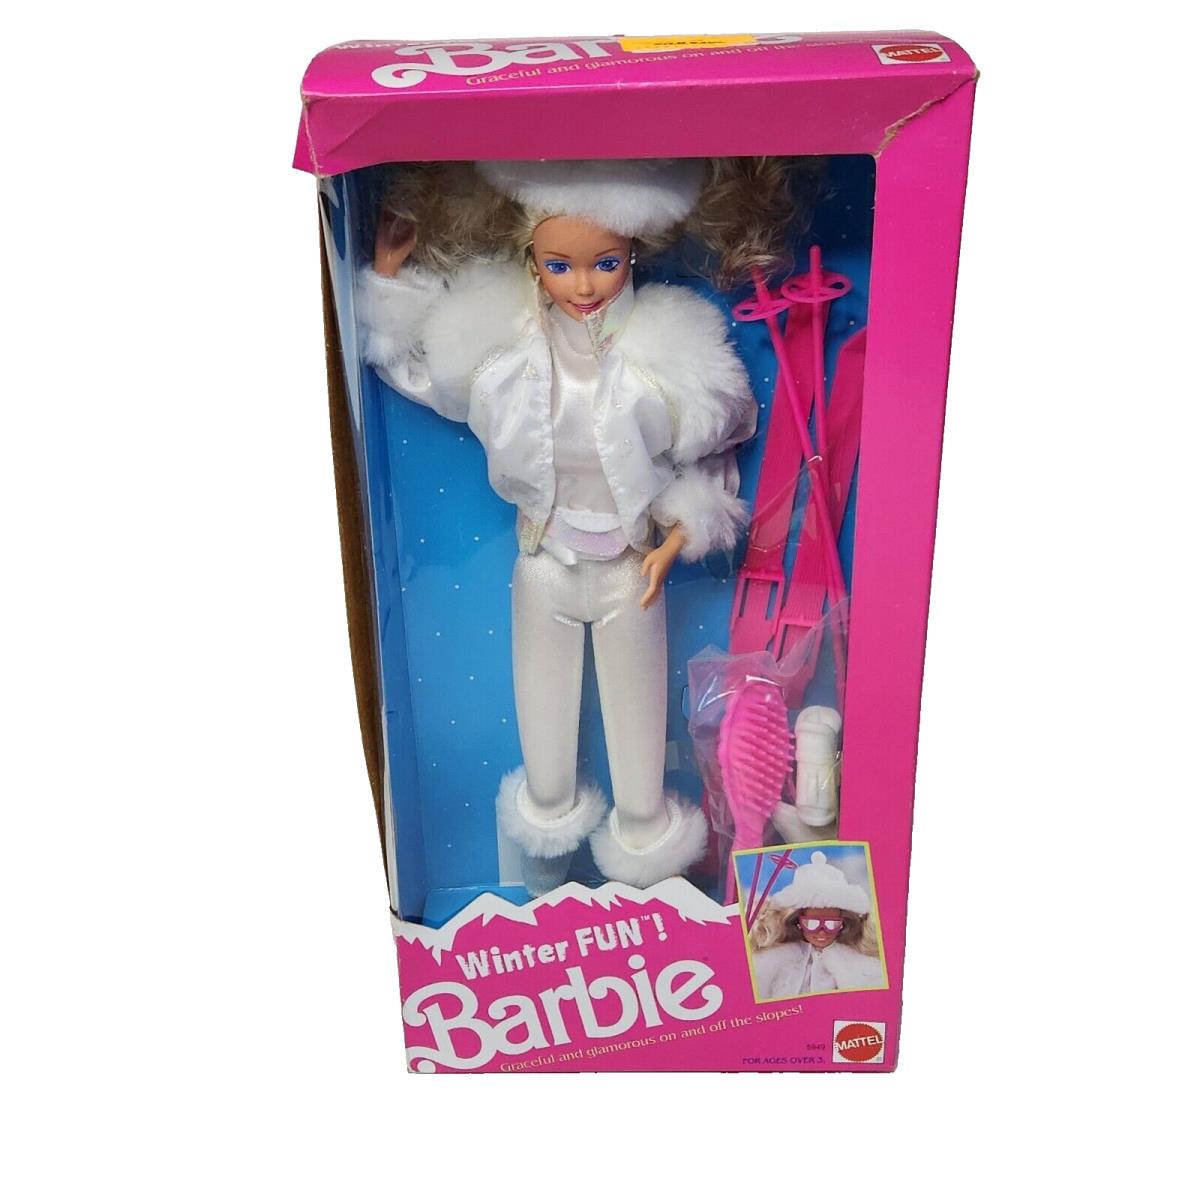 Vintage 1990 Winter Fun Barbie Doll Mattel Box 5949 Nos Creases